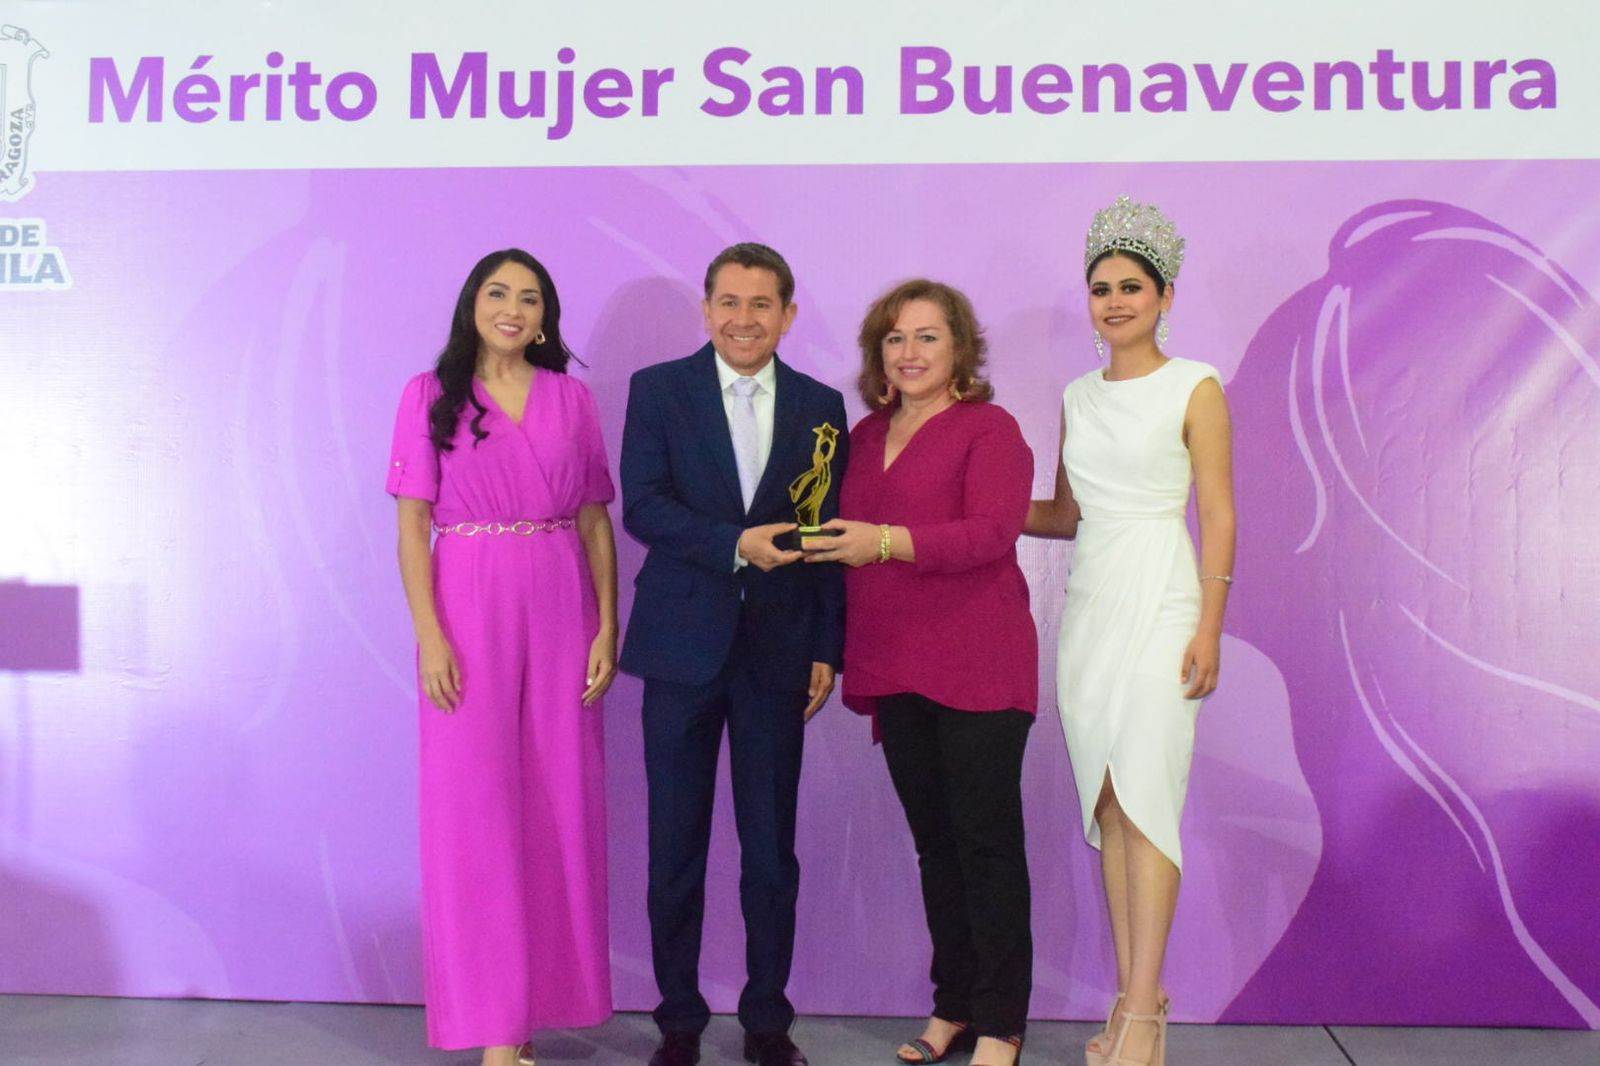 Entrega Hugo preseas de "Mérito Mujer"